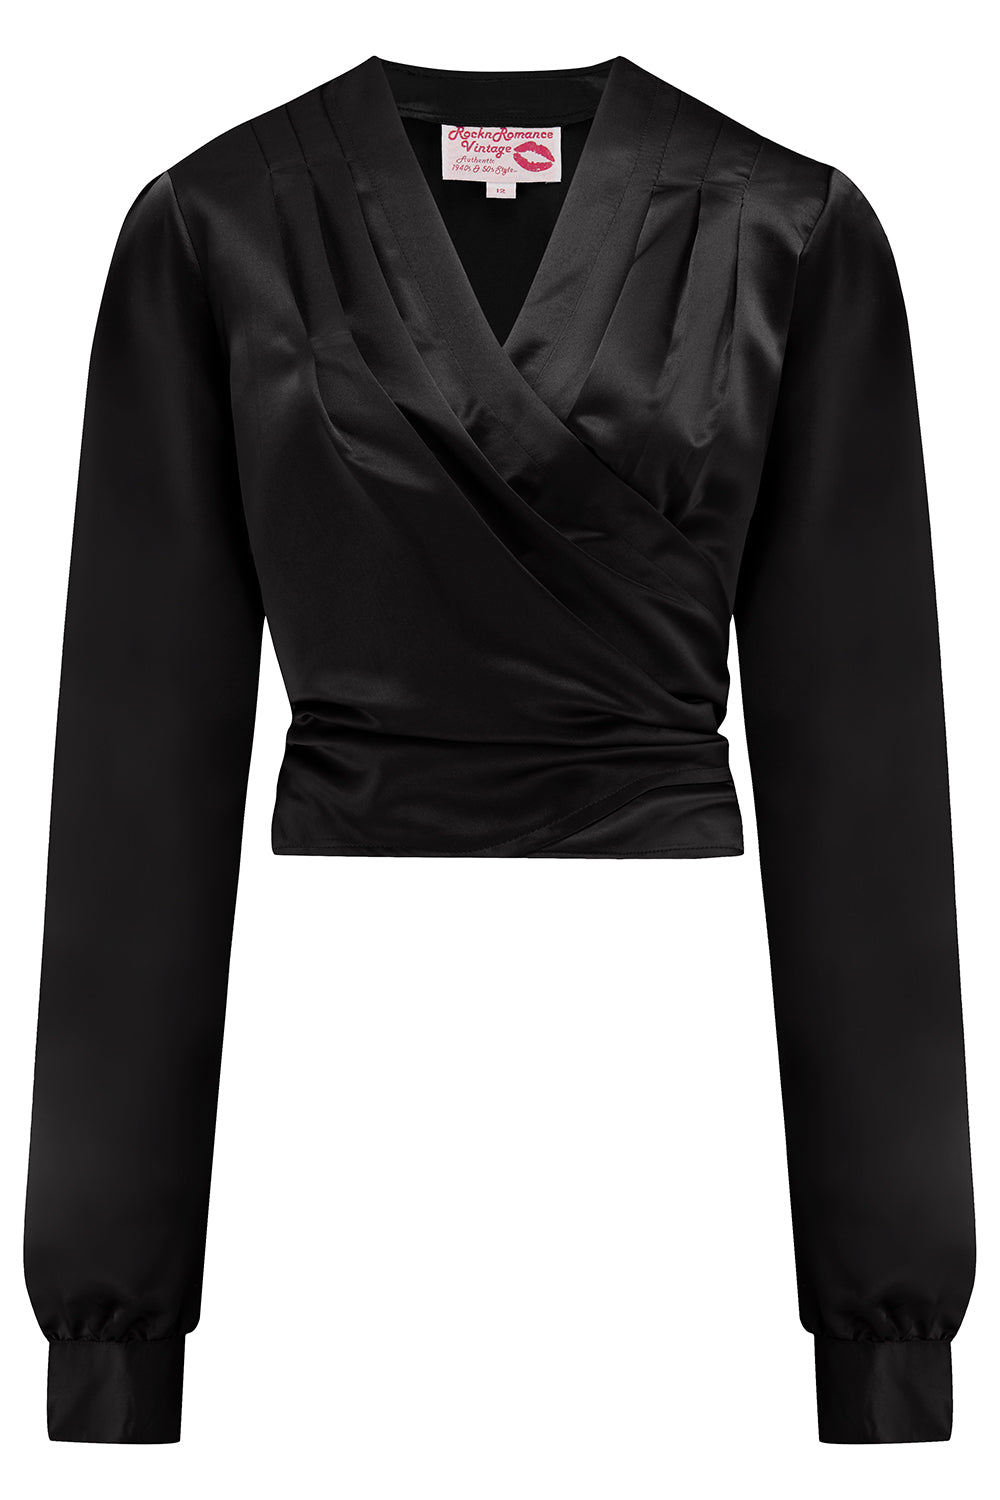 RnR "Luxe" Range.. The "Darla" Long Sleeve Wrap Blouse in Super Luxurious Onyx Black SATIN